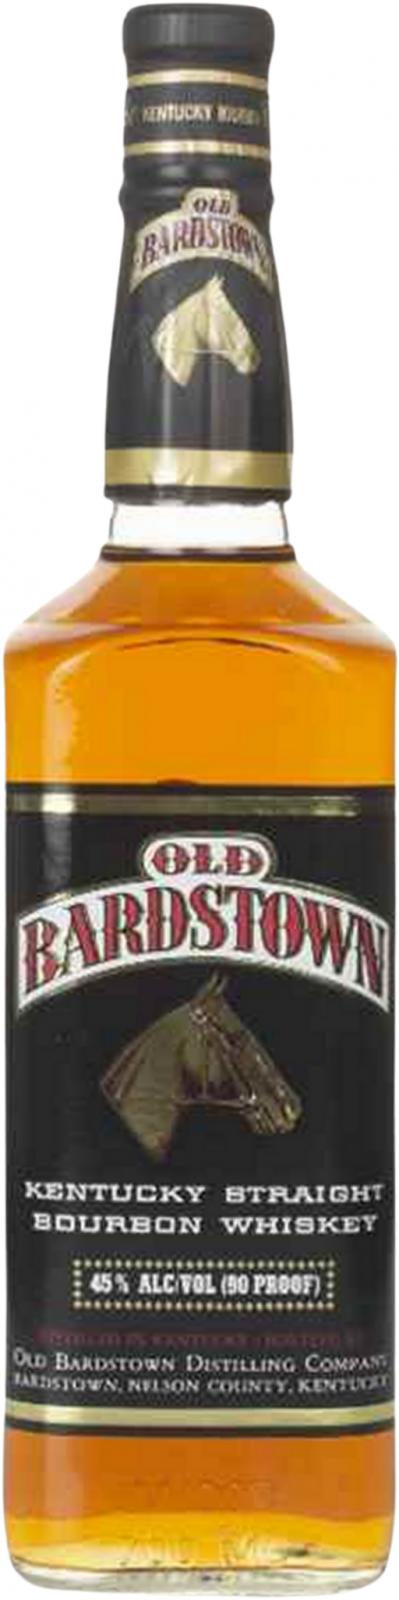 Old Bardstown Kentucky Straight Bourbon Whisky Black Label 45% 700ml